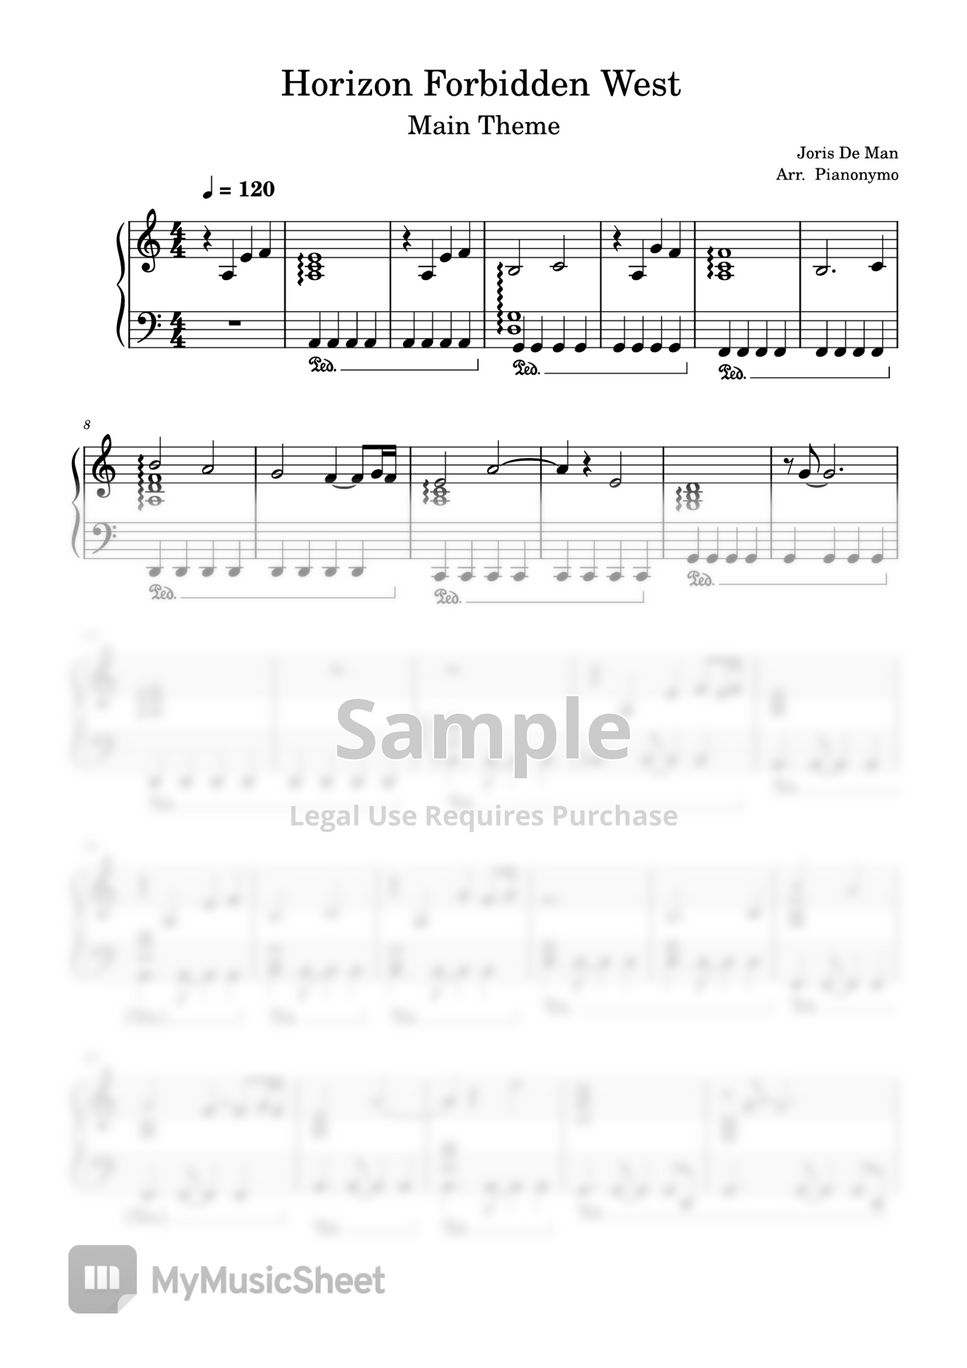 Horizon Forbidden West - Main Theme Sheets by Pianonymo